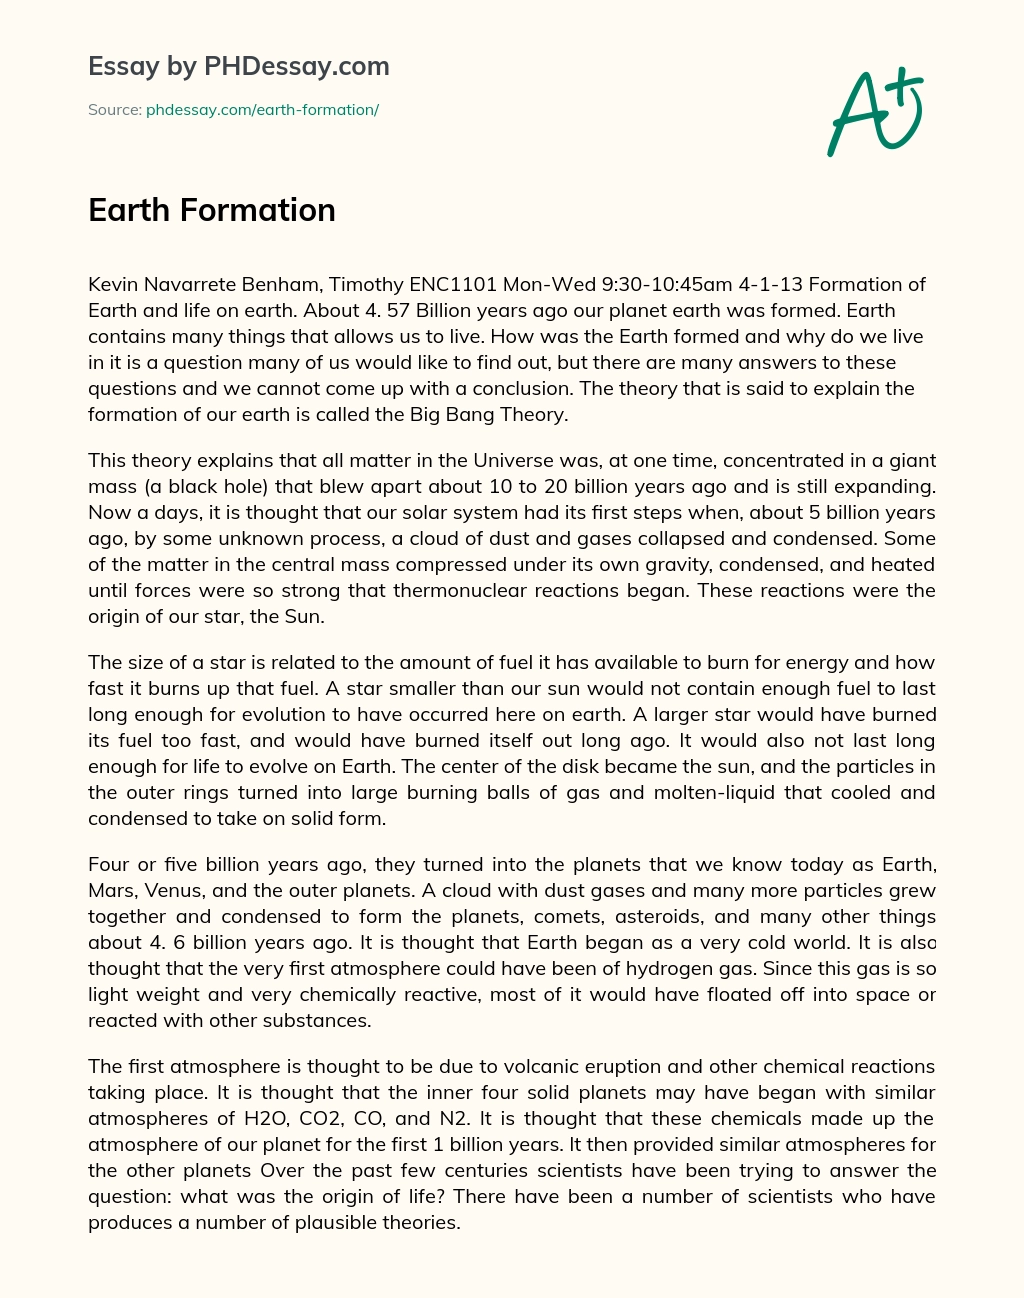 Earth Formation essay